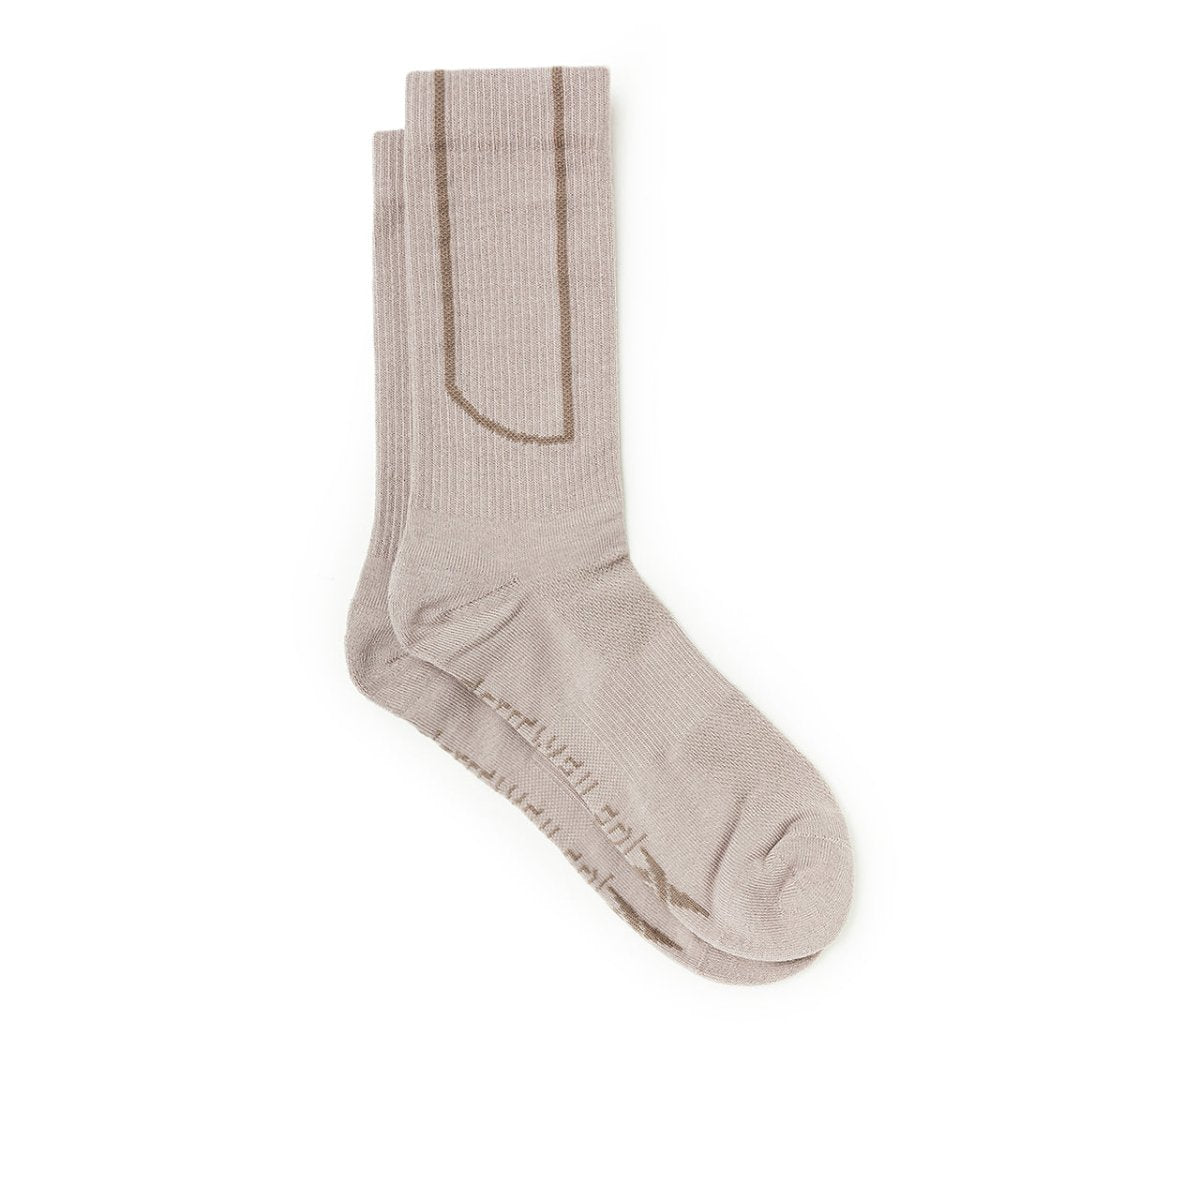 Image of Reebok x Cottweiler Socks (Light Brown)